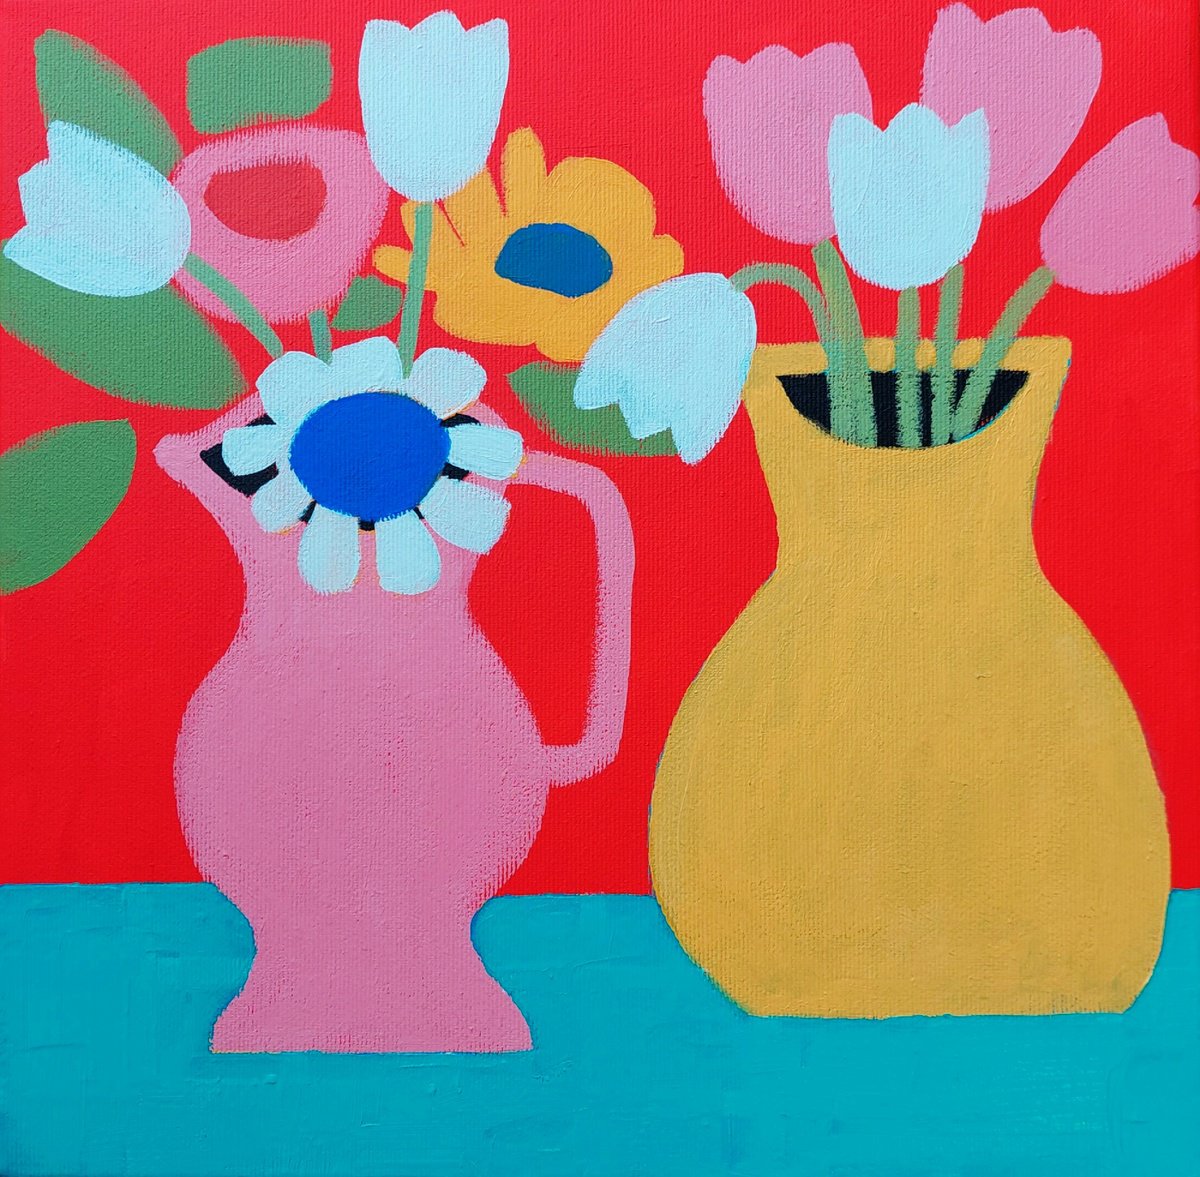 Spring Flowers III by Jan Rippingham